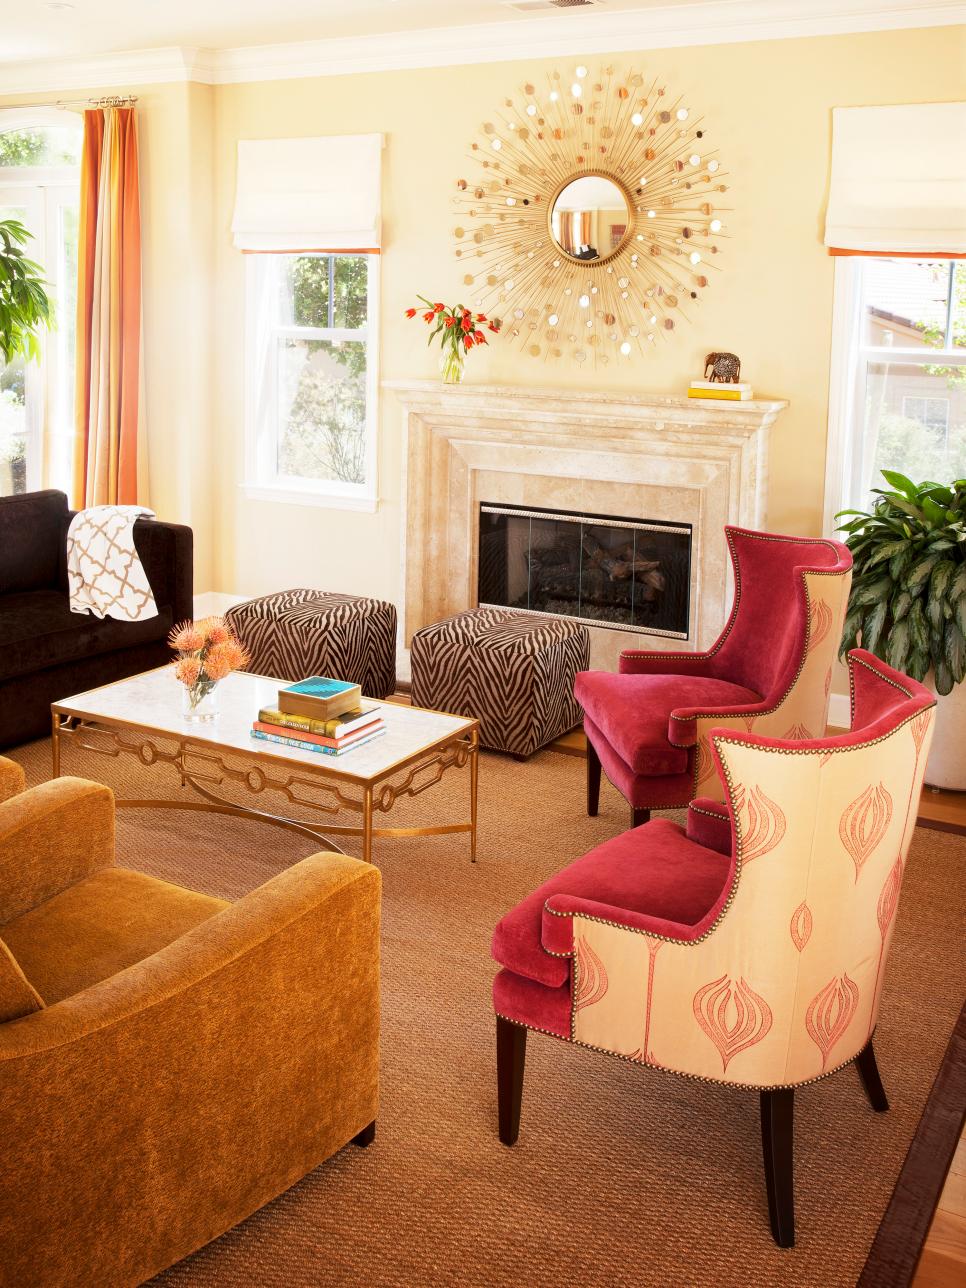 Living Room With Sunburst Mirror, Zebra Poufs, Upholstered Armchairs